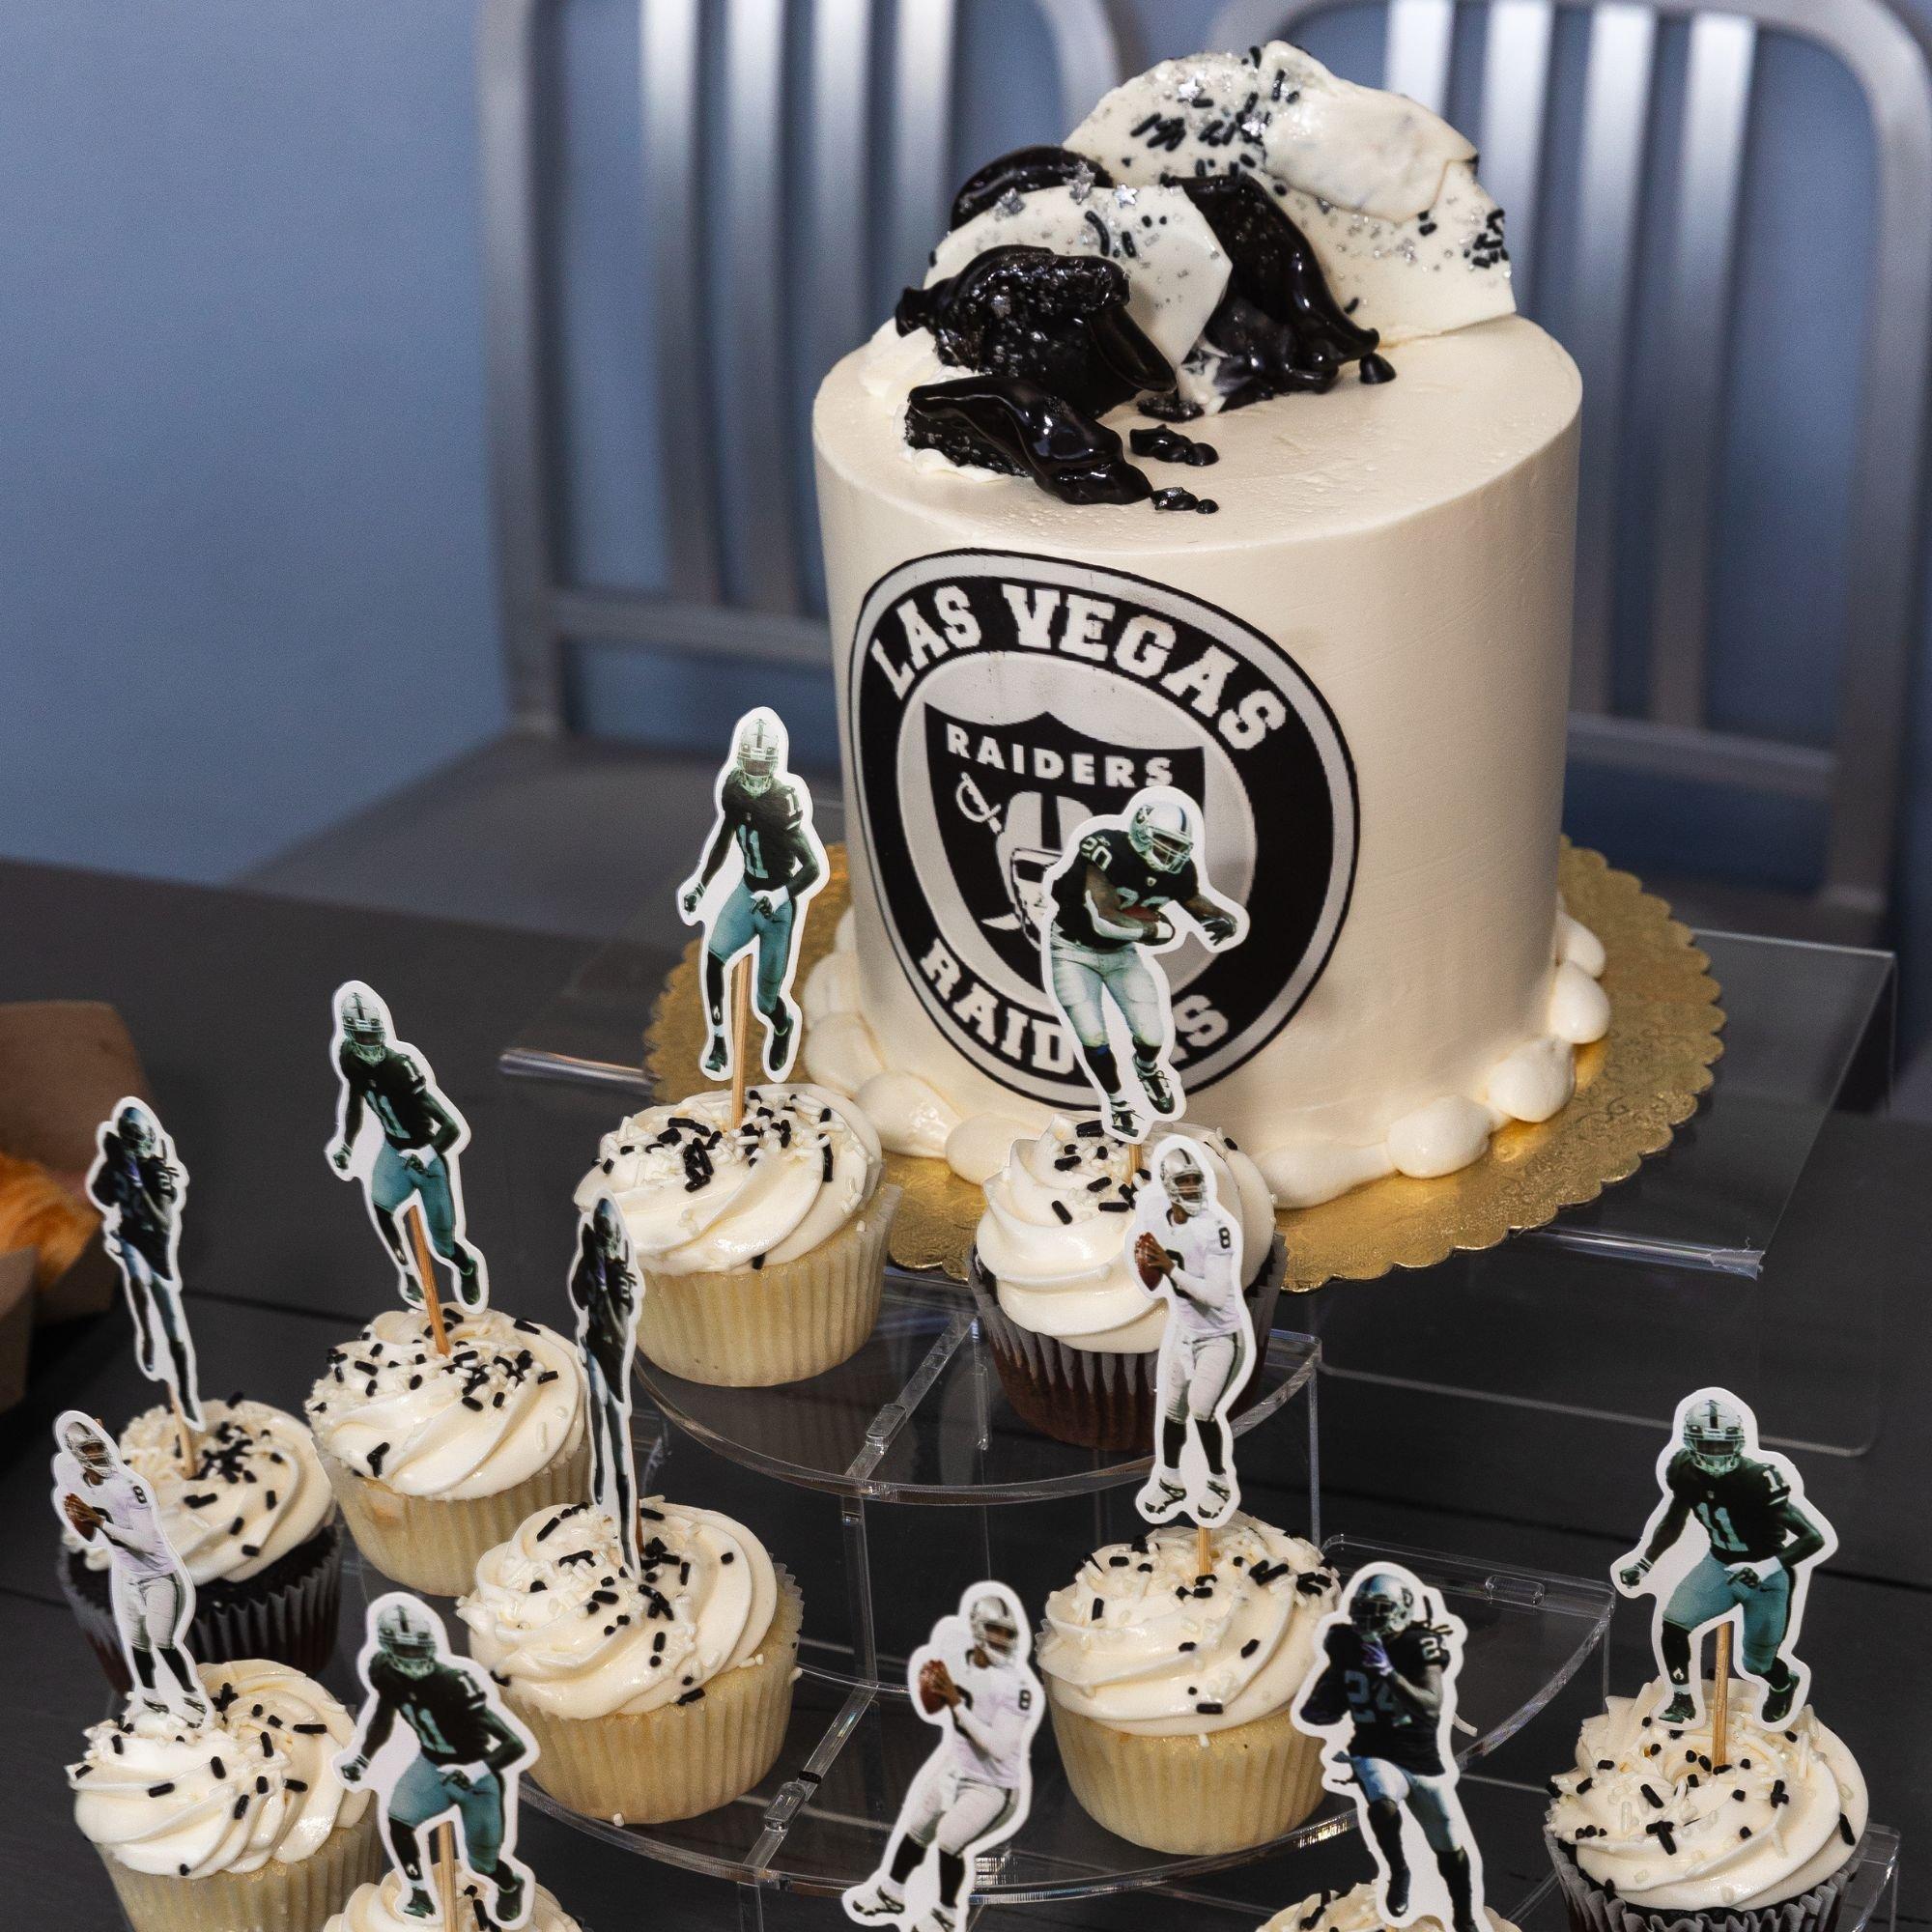 Las Vegas bakery has Raiders cupcakes for NFL season, Food